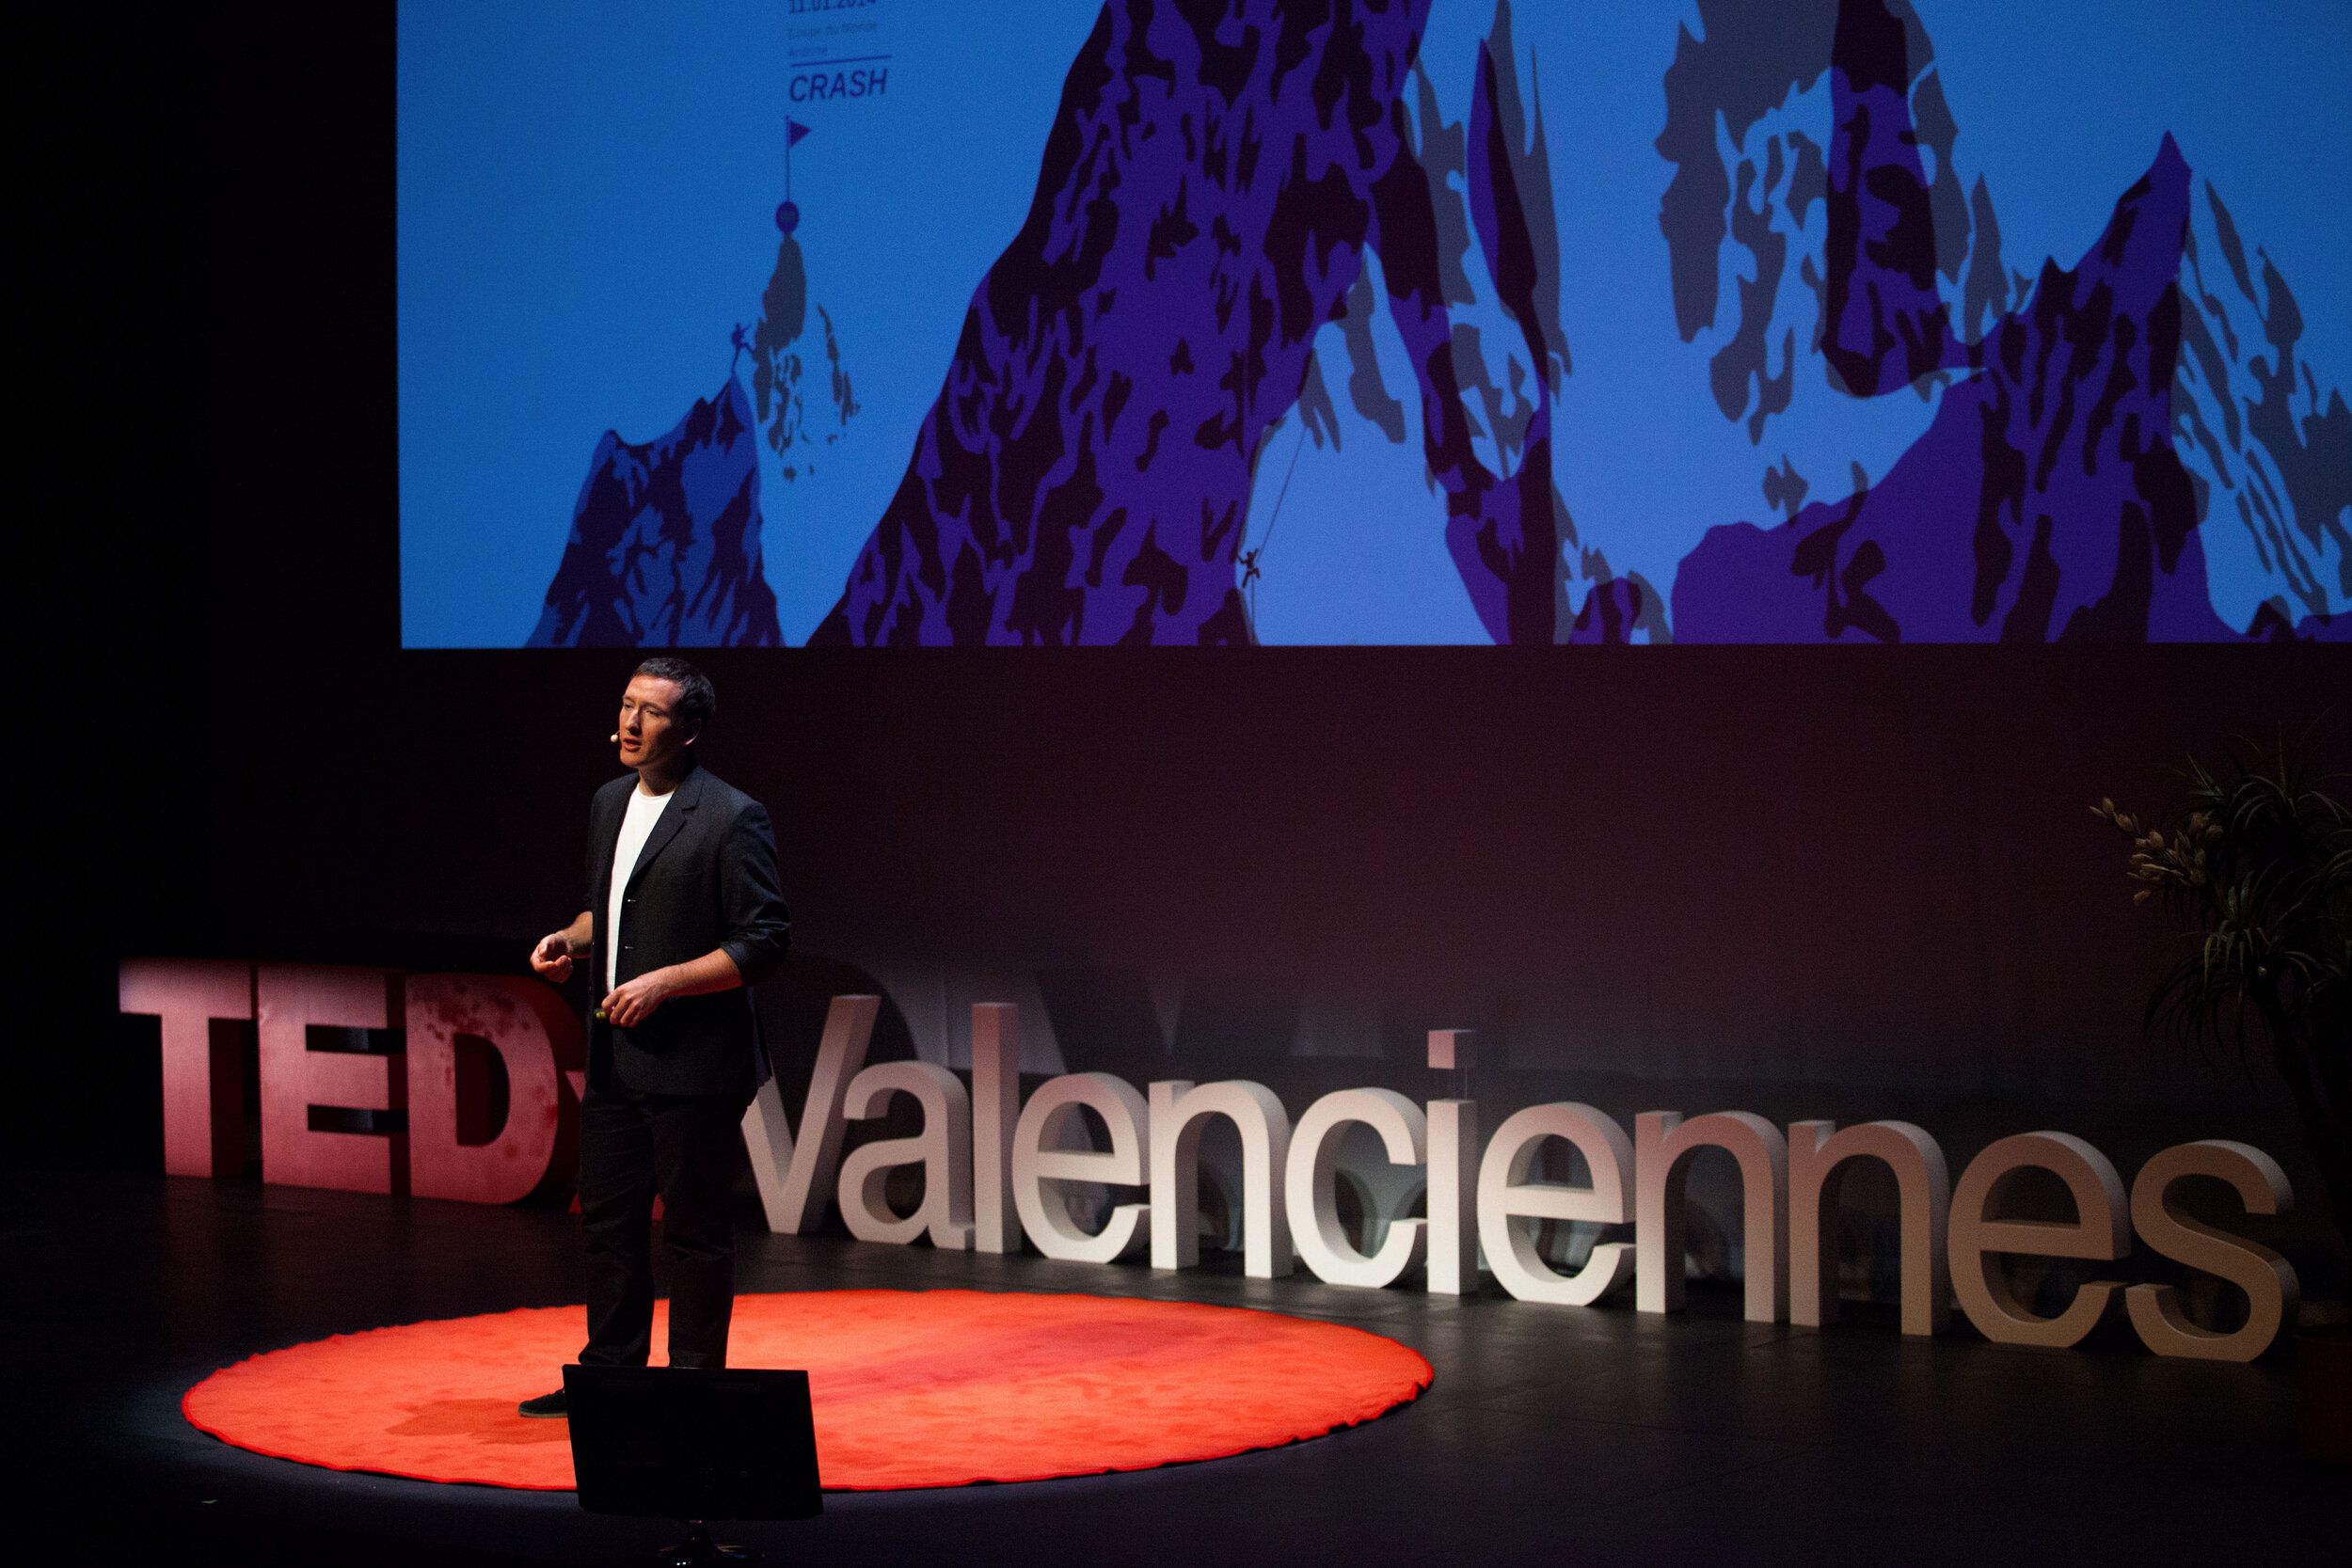 TEDxVAL_20161013_142©TEDxValenciennes-bylionelpiquard.jpg